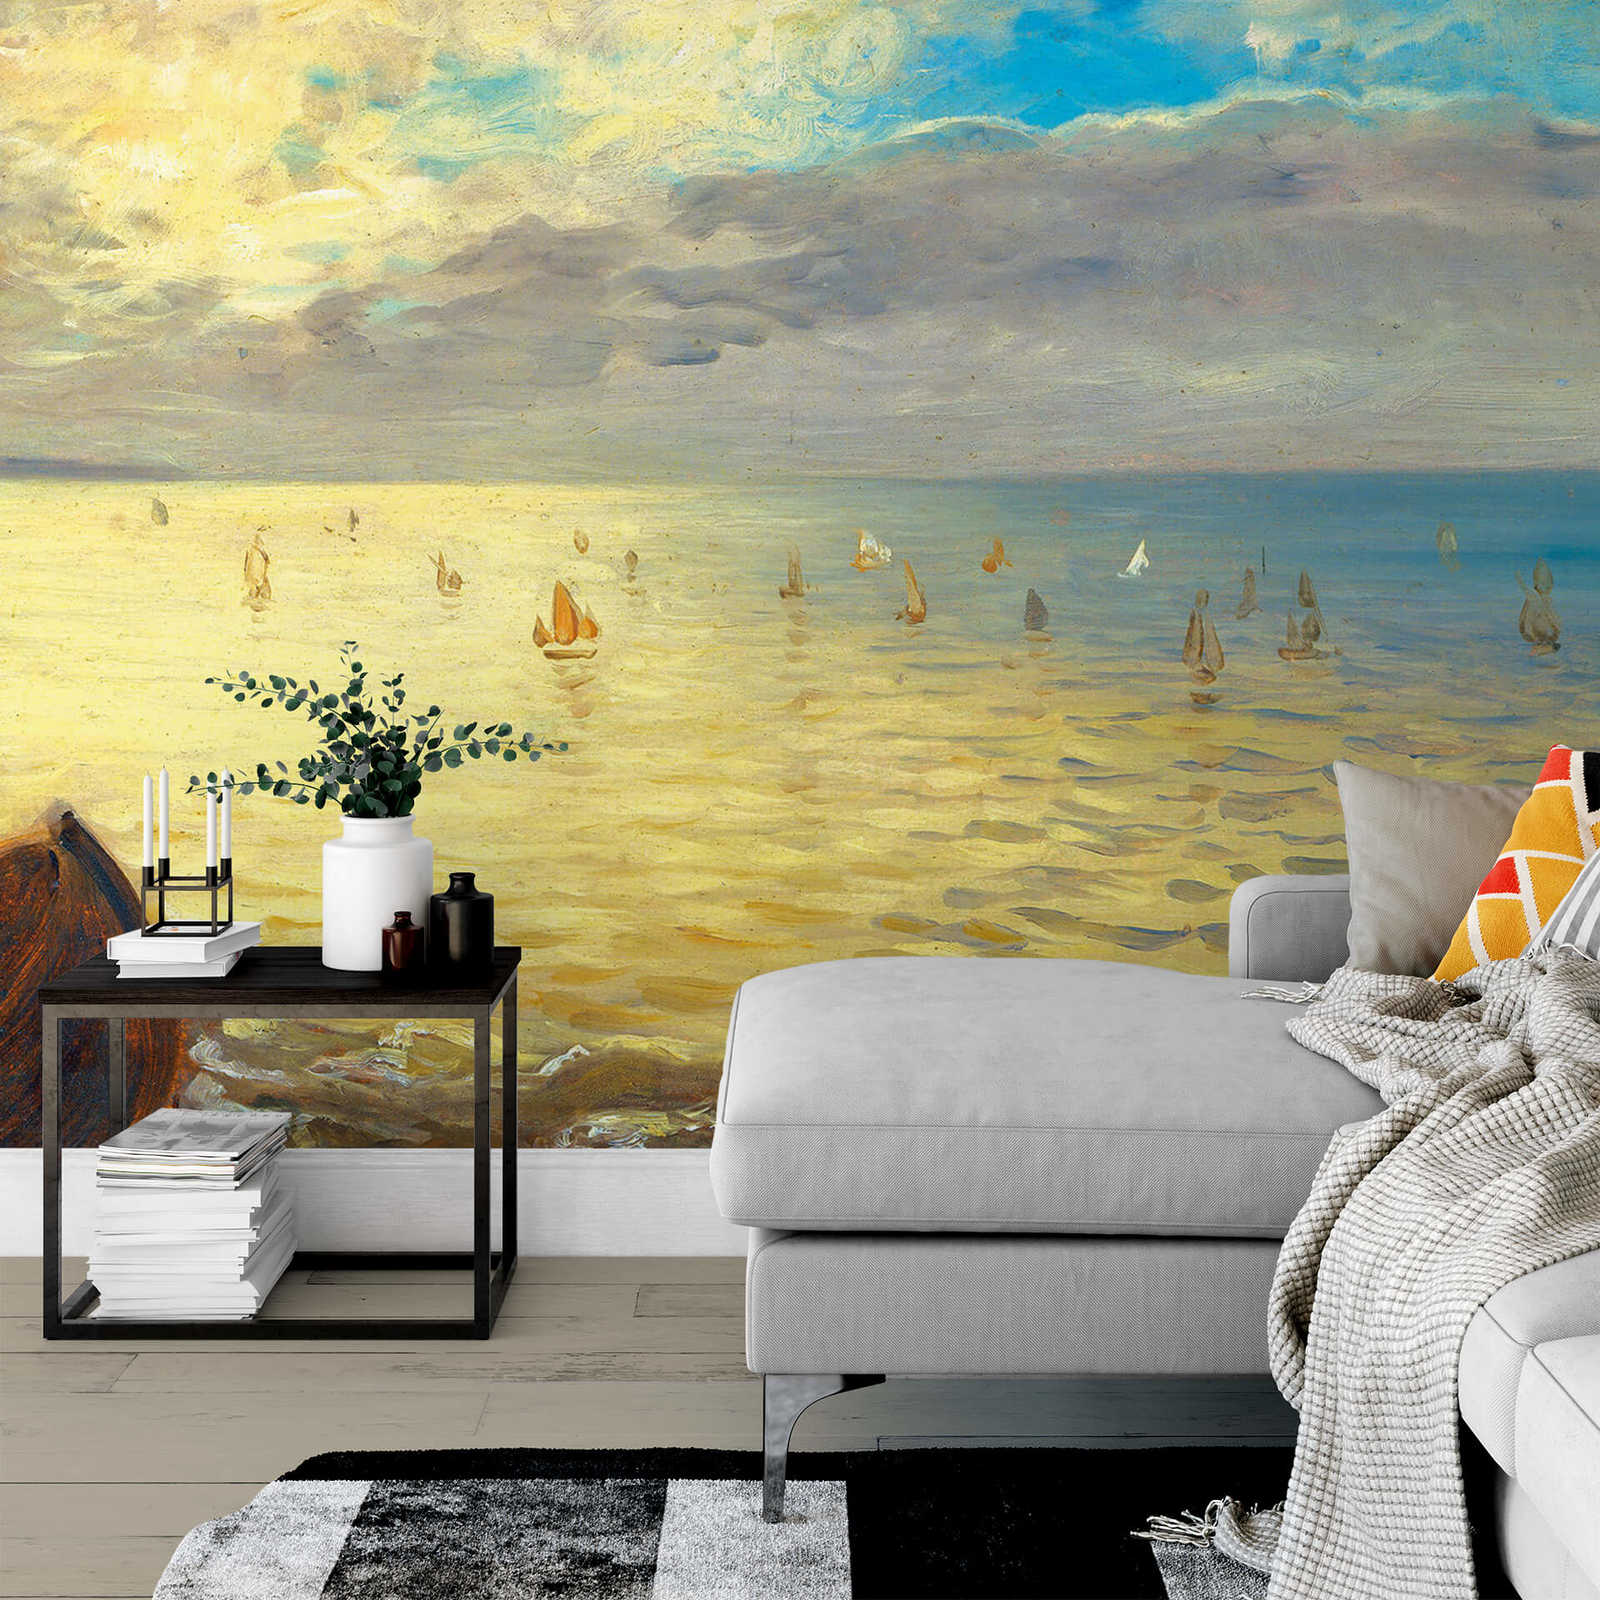             Photo wallpaper beach and sea - yellow, blue
        